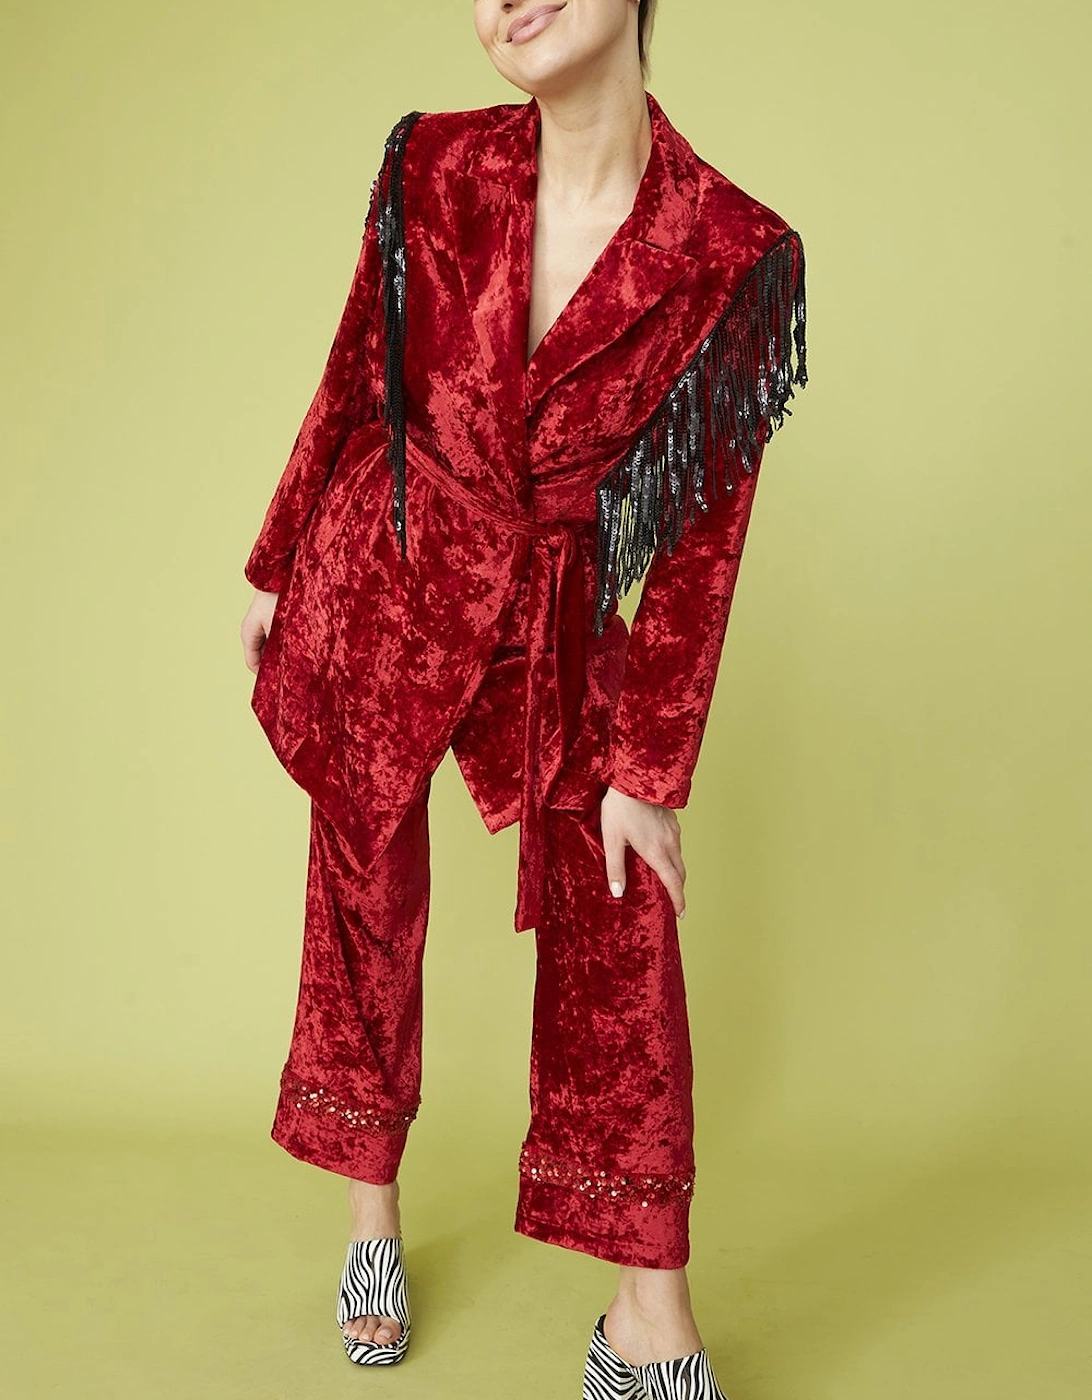 Red Crushed Velvet Blazer dress with Sequin Tassels